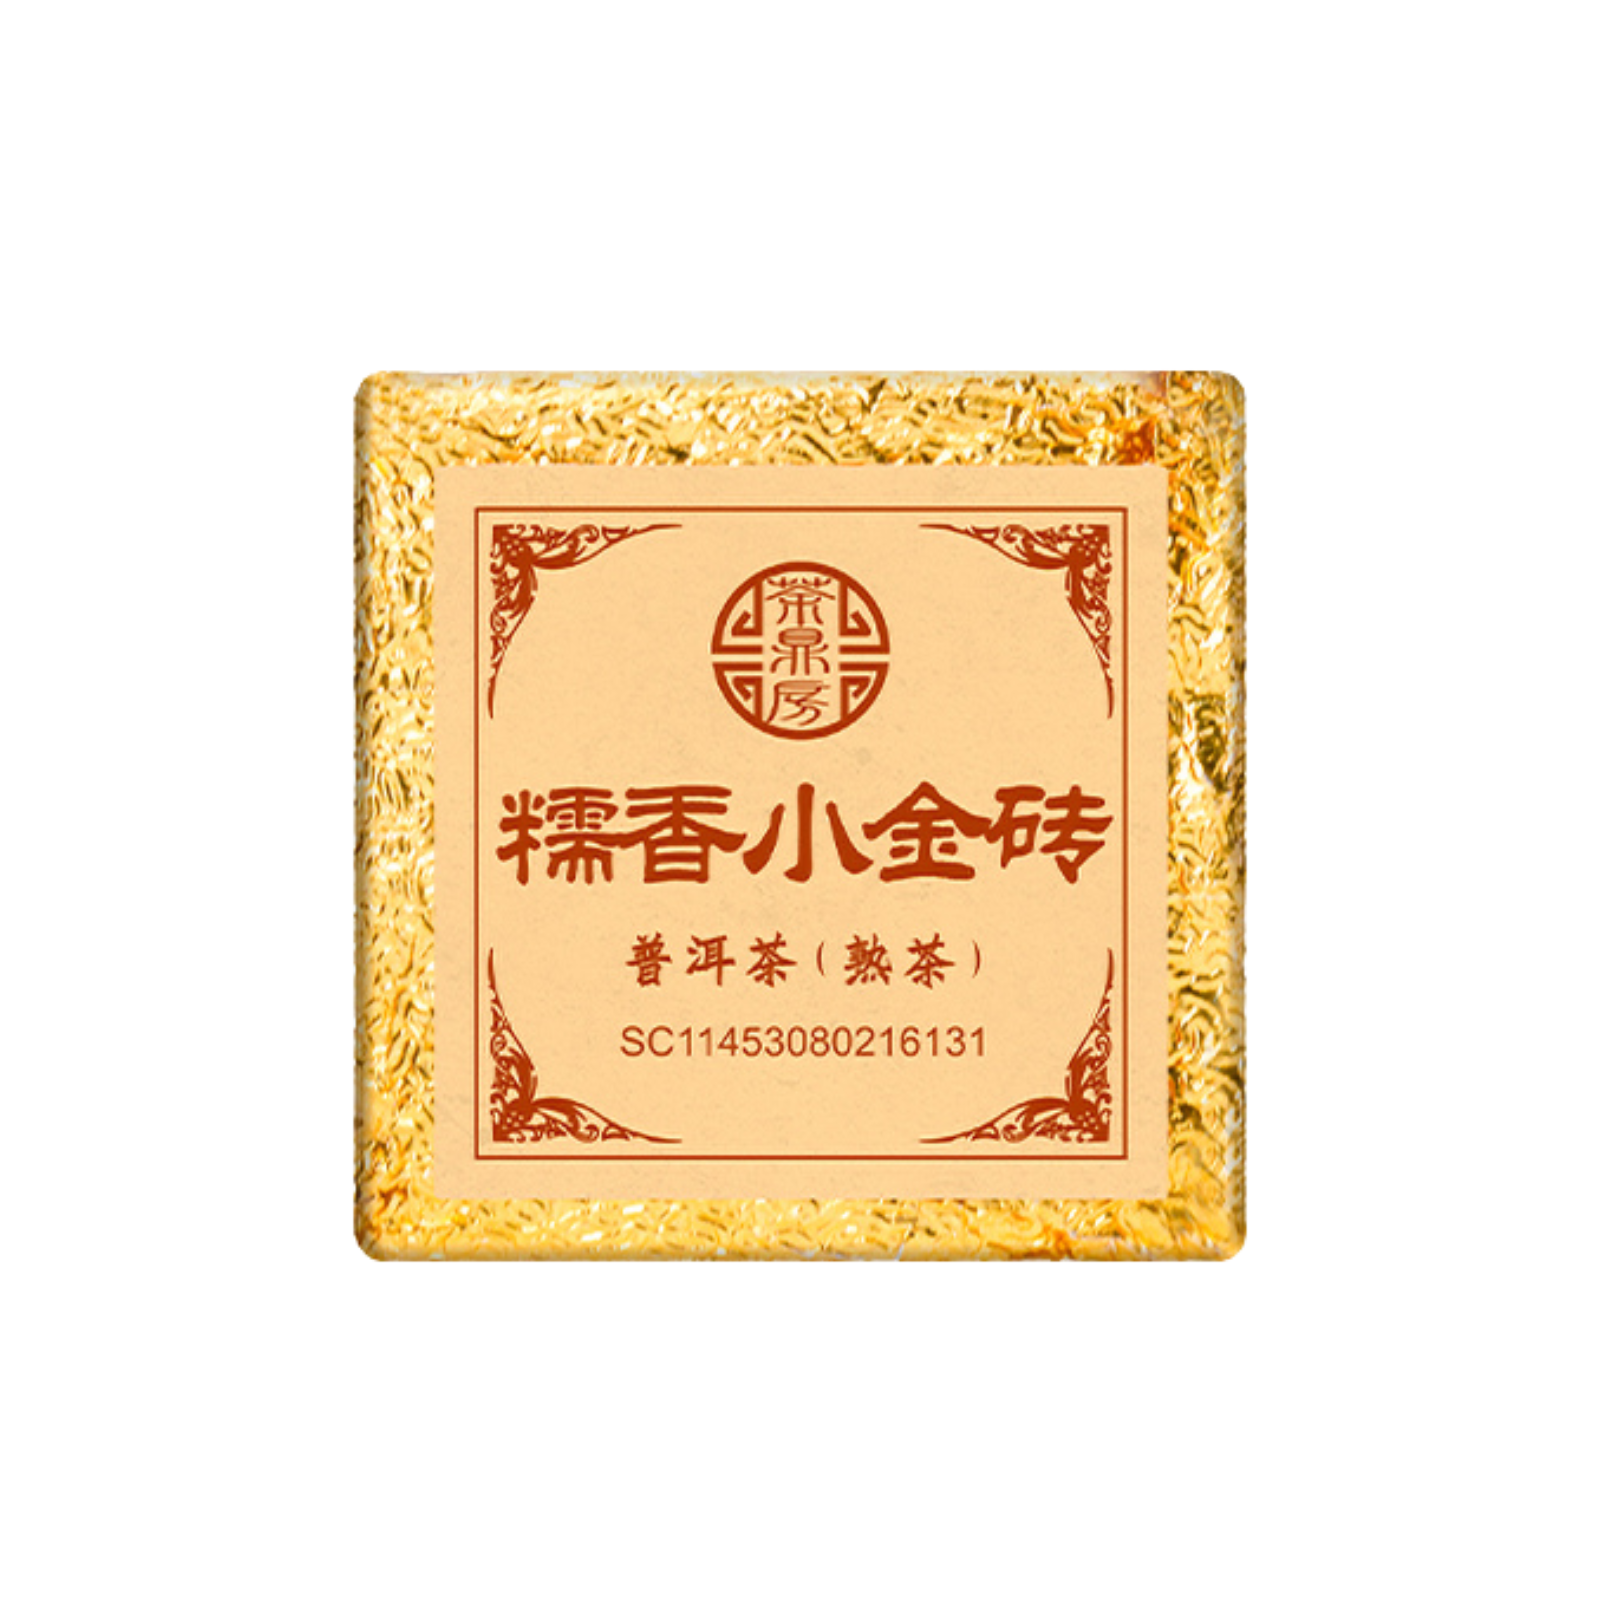 Chinese Golden Cube Glutinous Rice Fragrant Tea 中国黄金砖糯香沱茶 10pcs